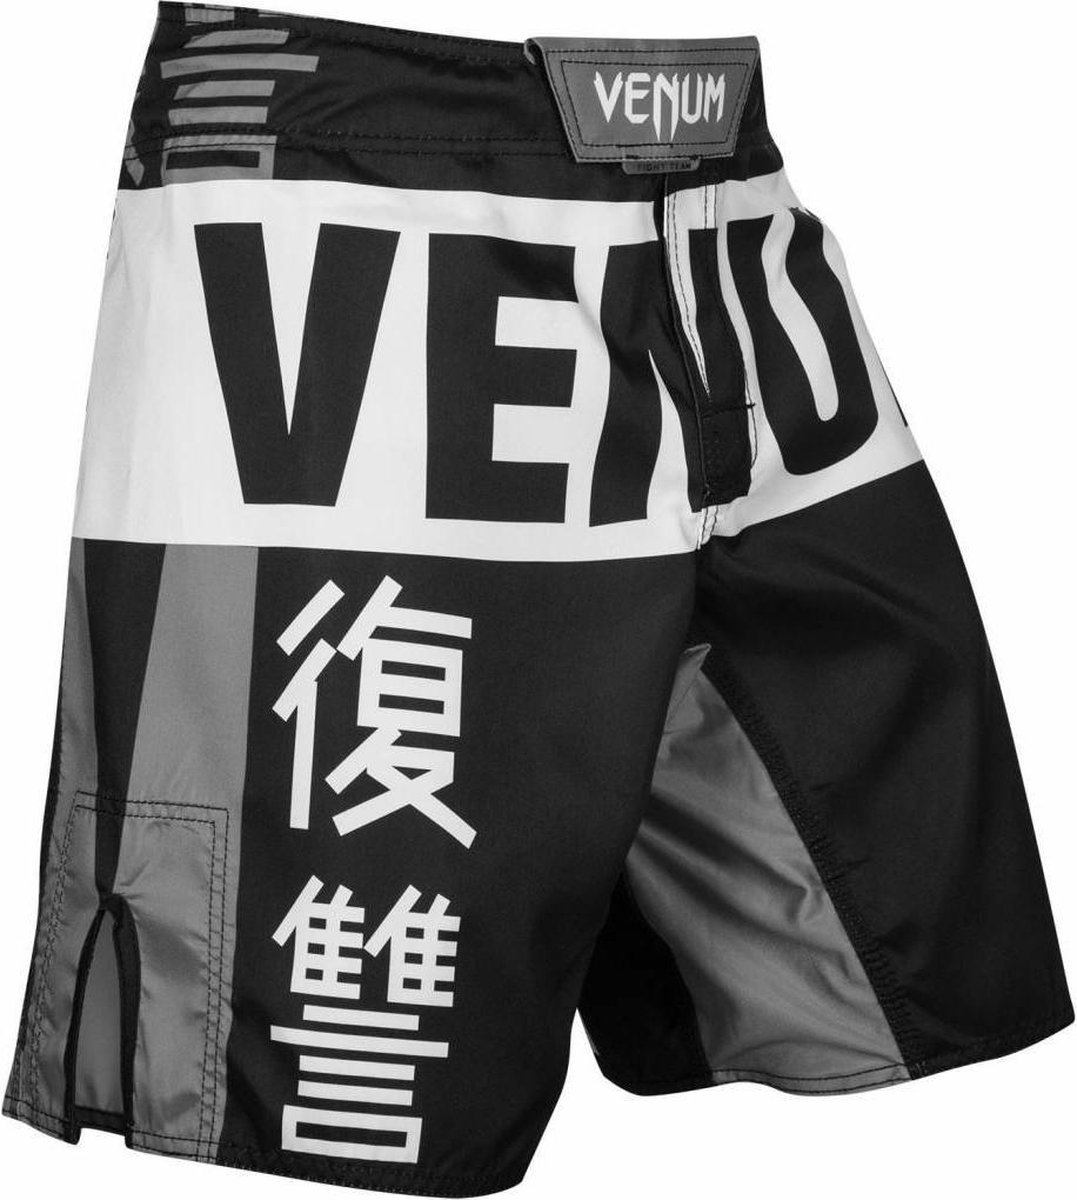 Venum Revenge Fight Shorts Zwart Grijs Venum Shop Europe Kies hier uw maat Venum Fight Shorts: L - Jeansmaat 34/35